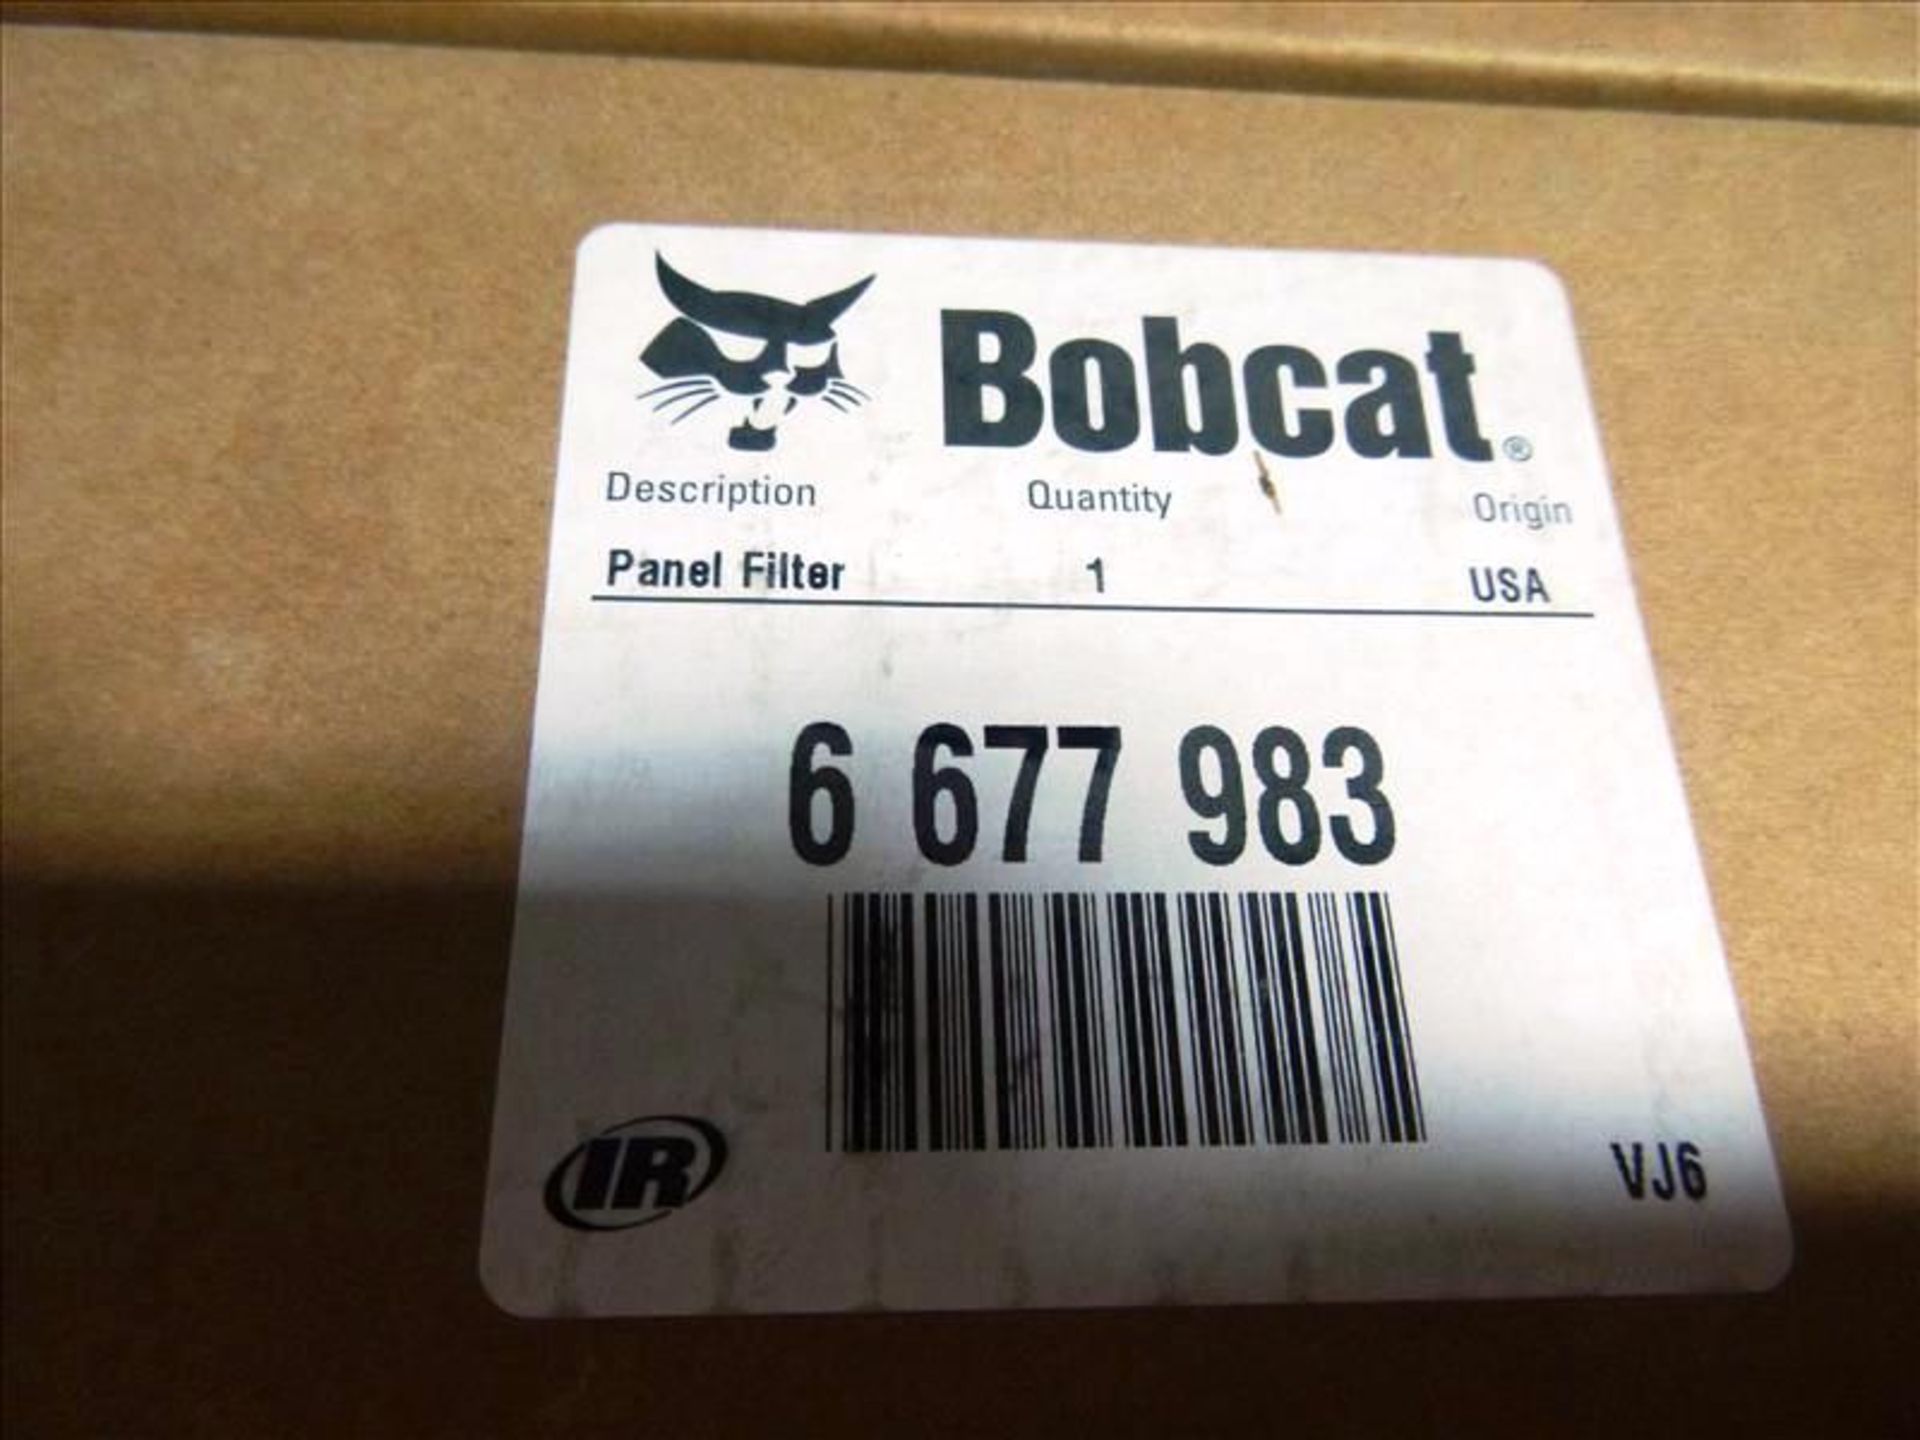 misc. Bobcat spare parts (CRT 5), incl.: Panel Filters p/n 6 677 983, Sensors p/n 6 684 911, Sensors - Image 2 of 5